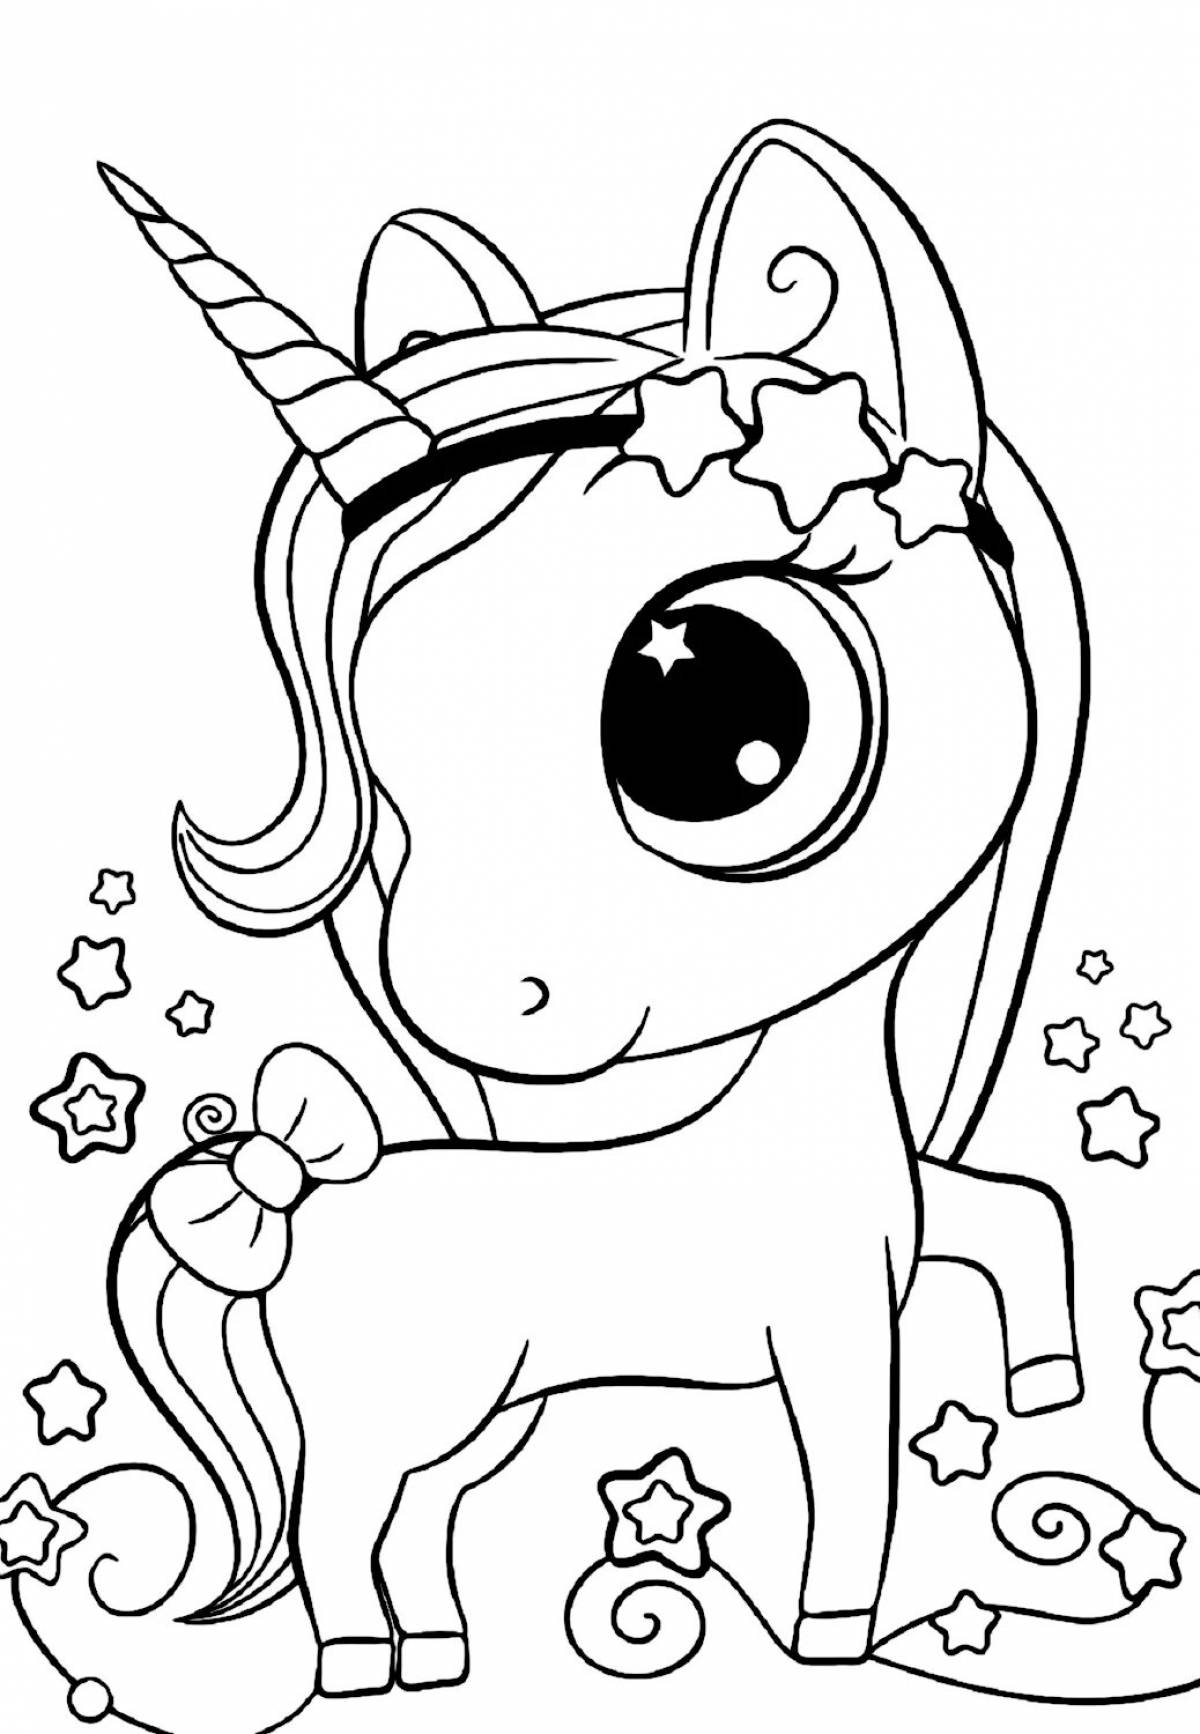 Happy coloring page unicorn для детей